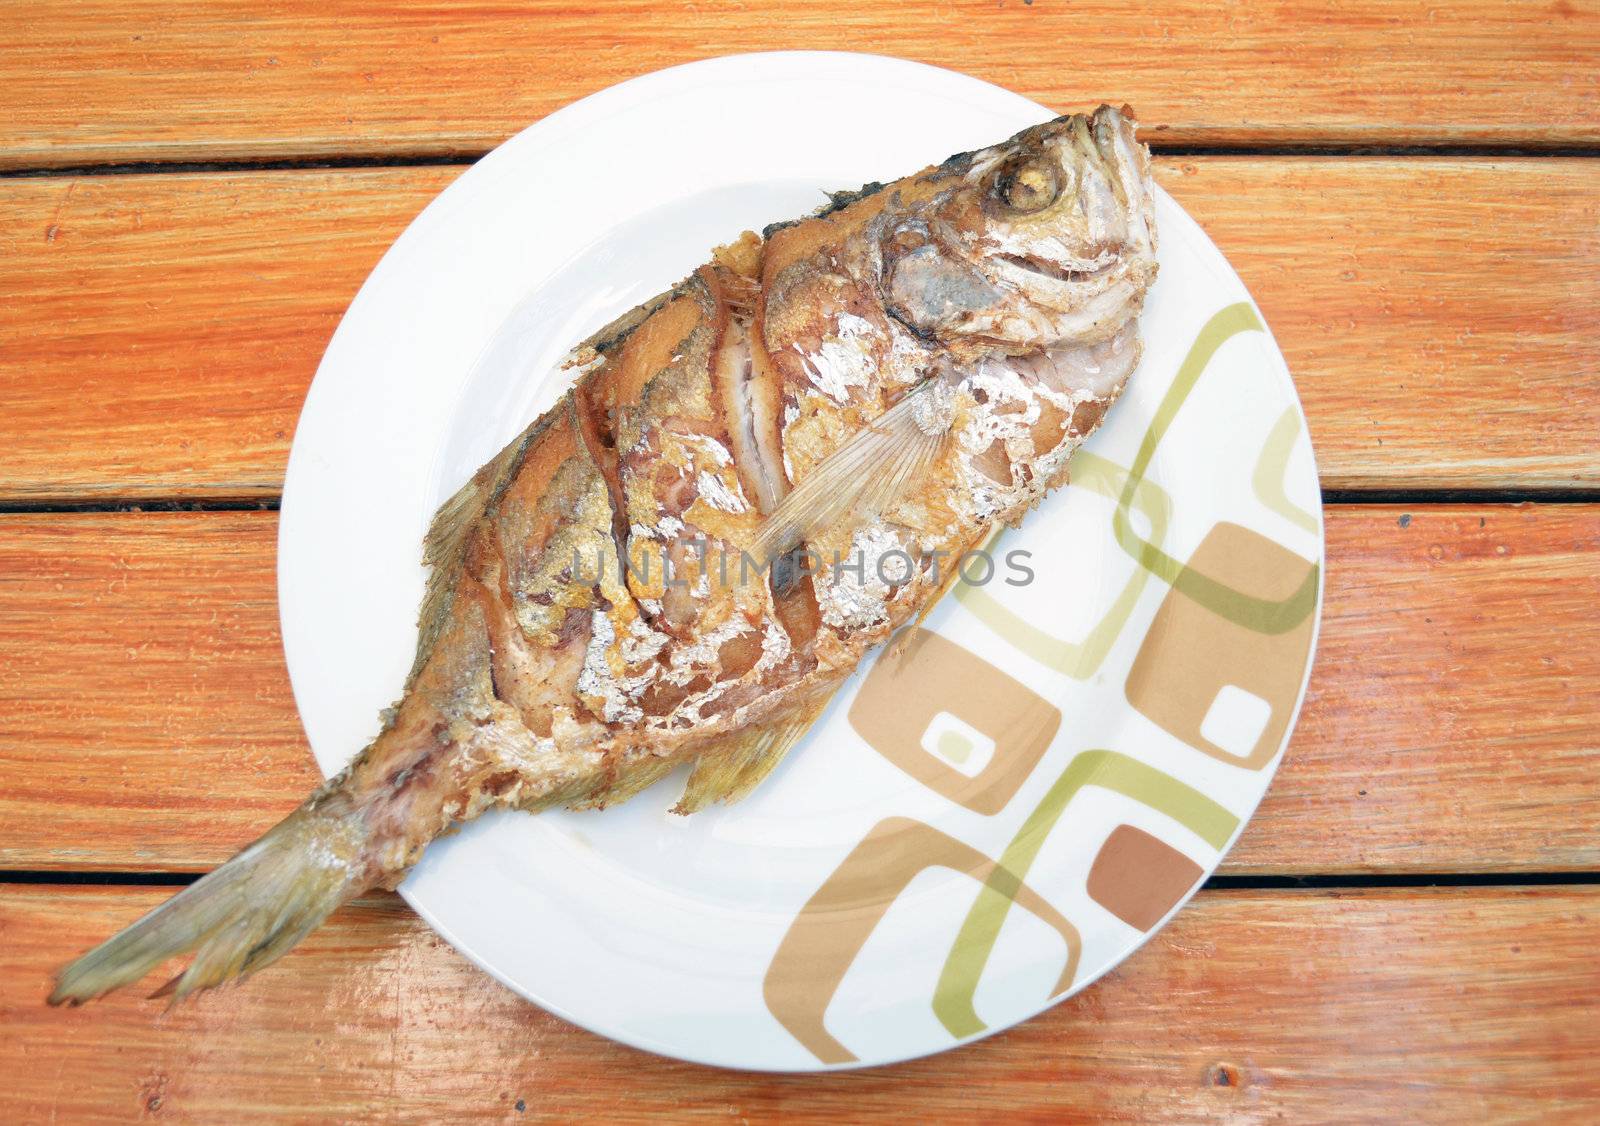 Fried fish on dish by siraanamwong